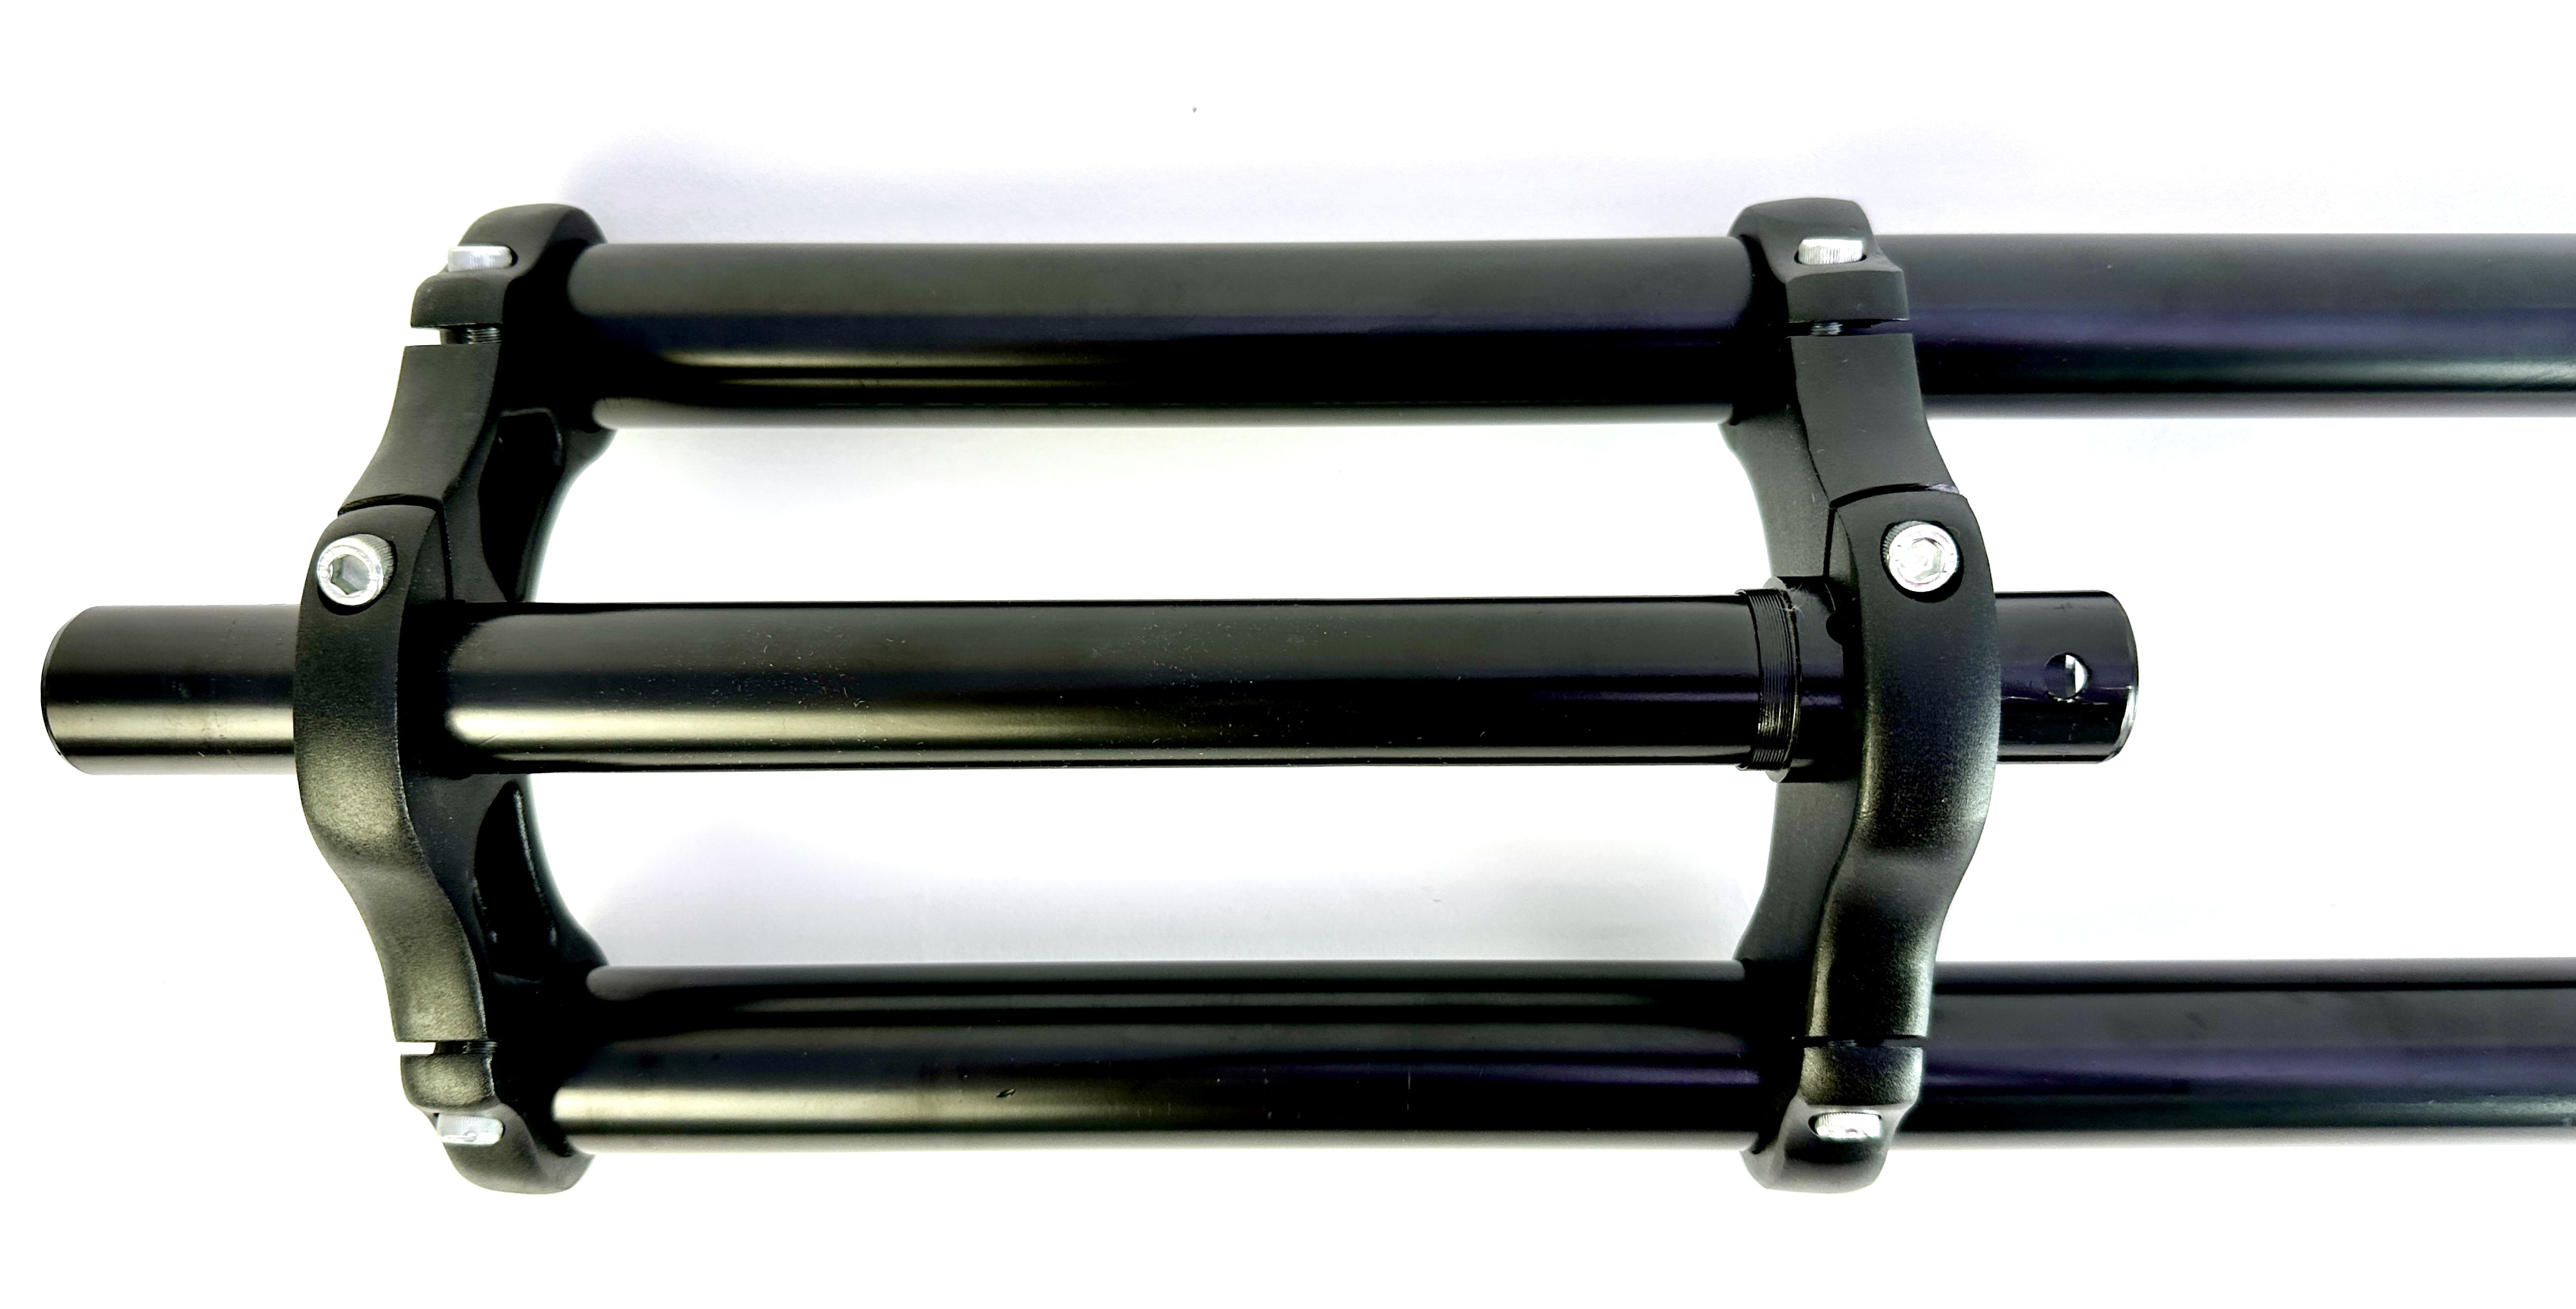 2-Double crown fork 570 mm black 1 inch shaft